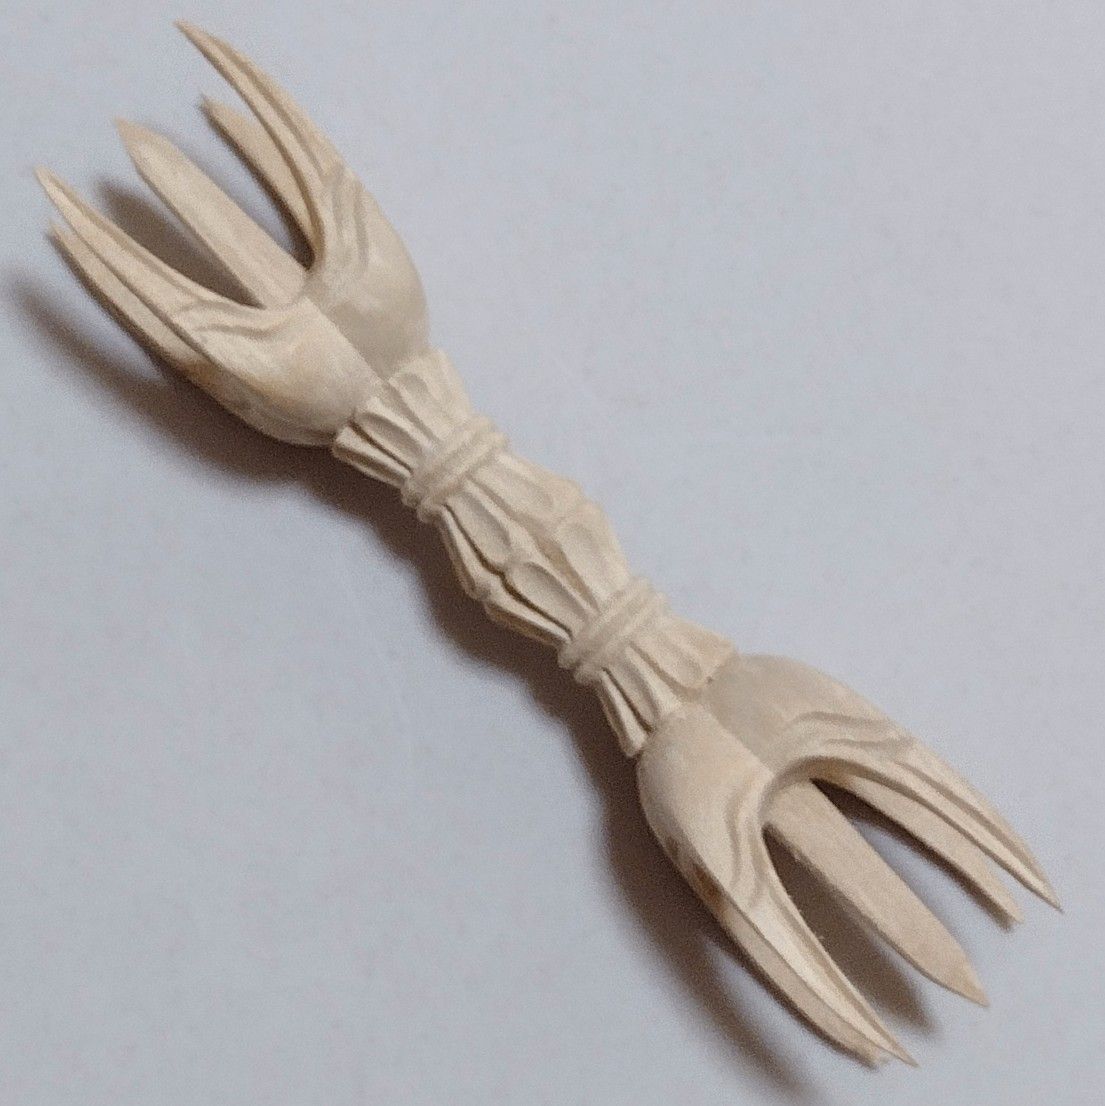 五鈷杵 木製 白木彫 仏具 お守り 密教法具